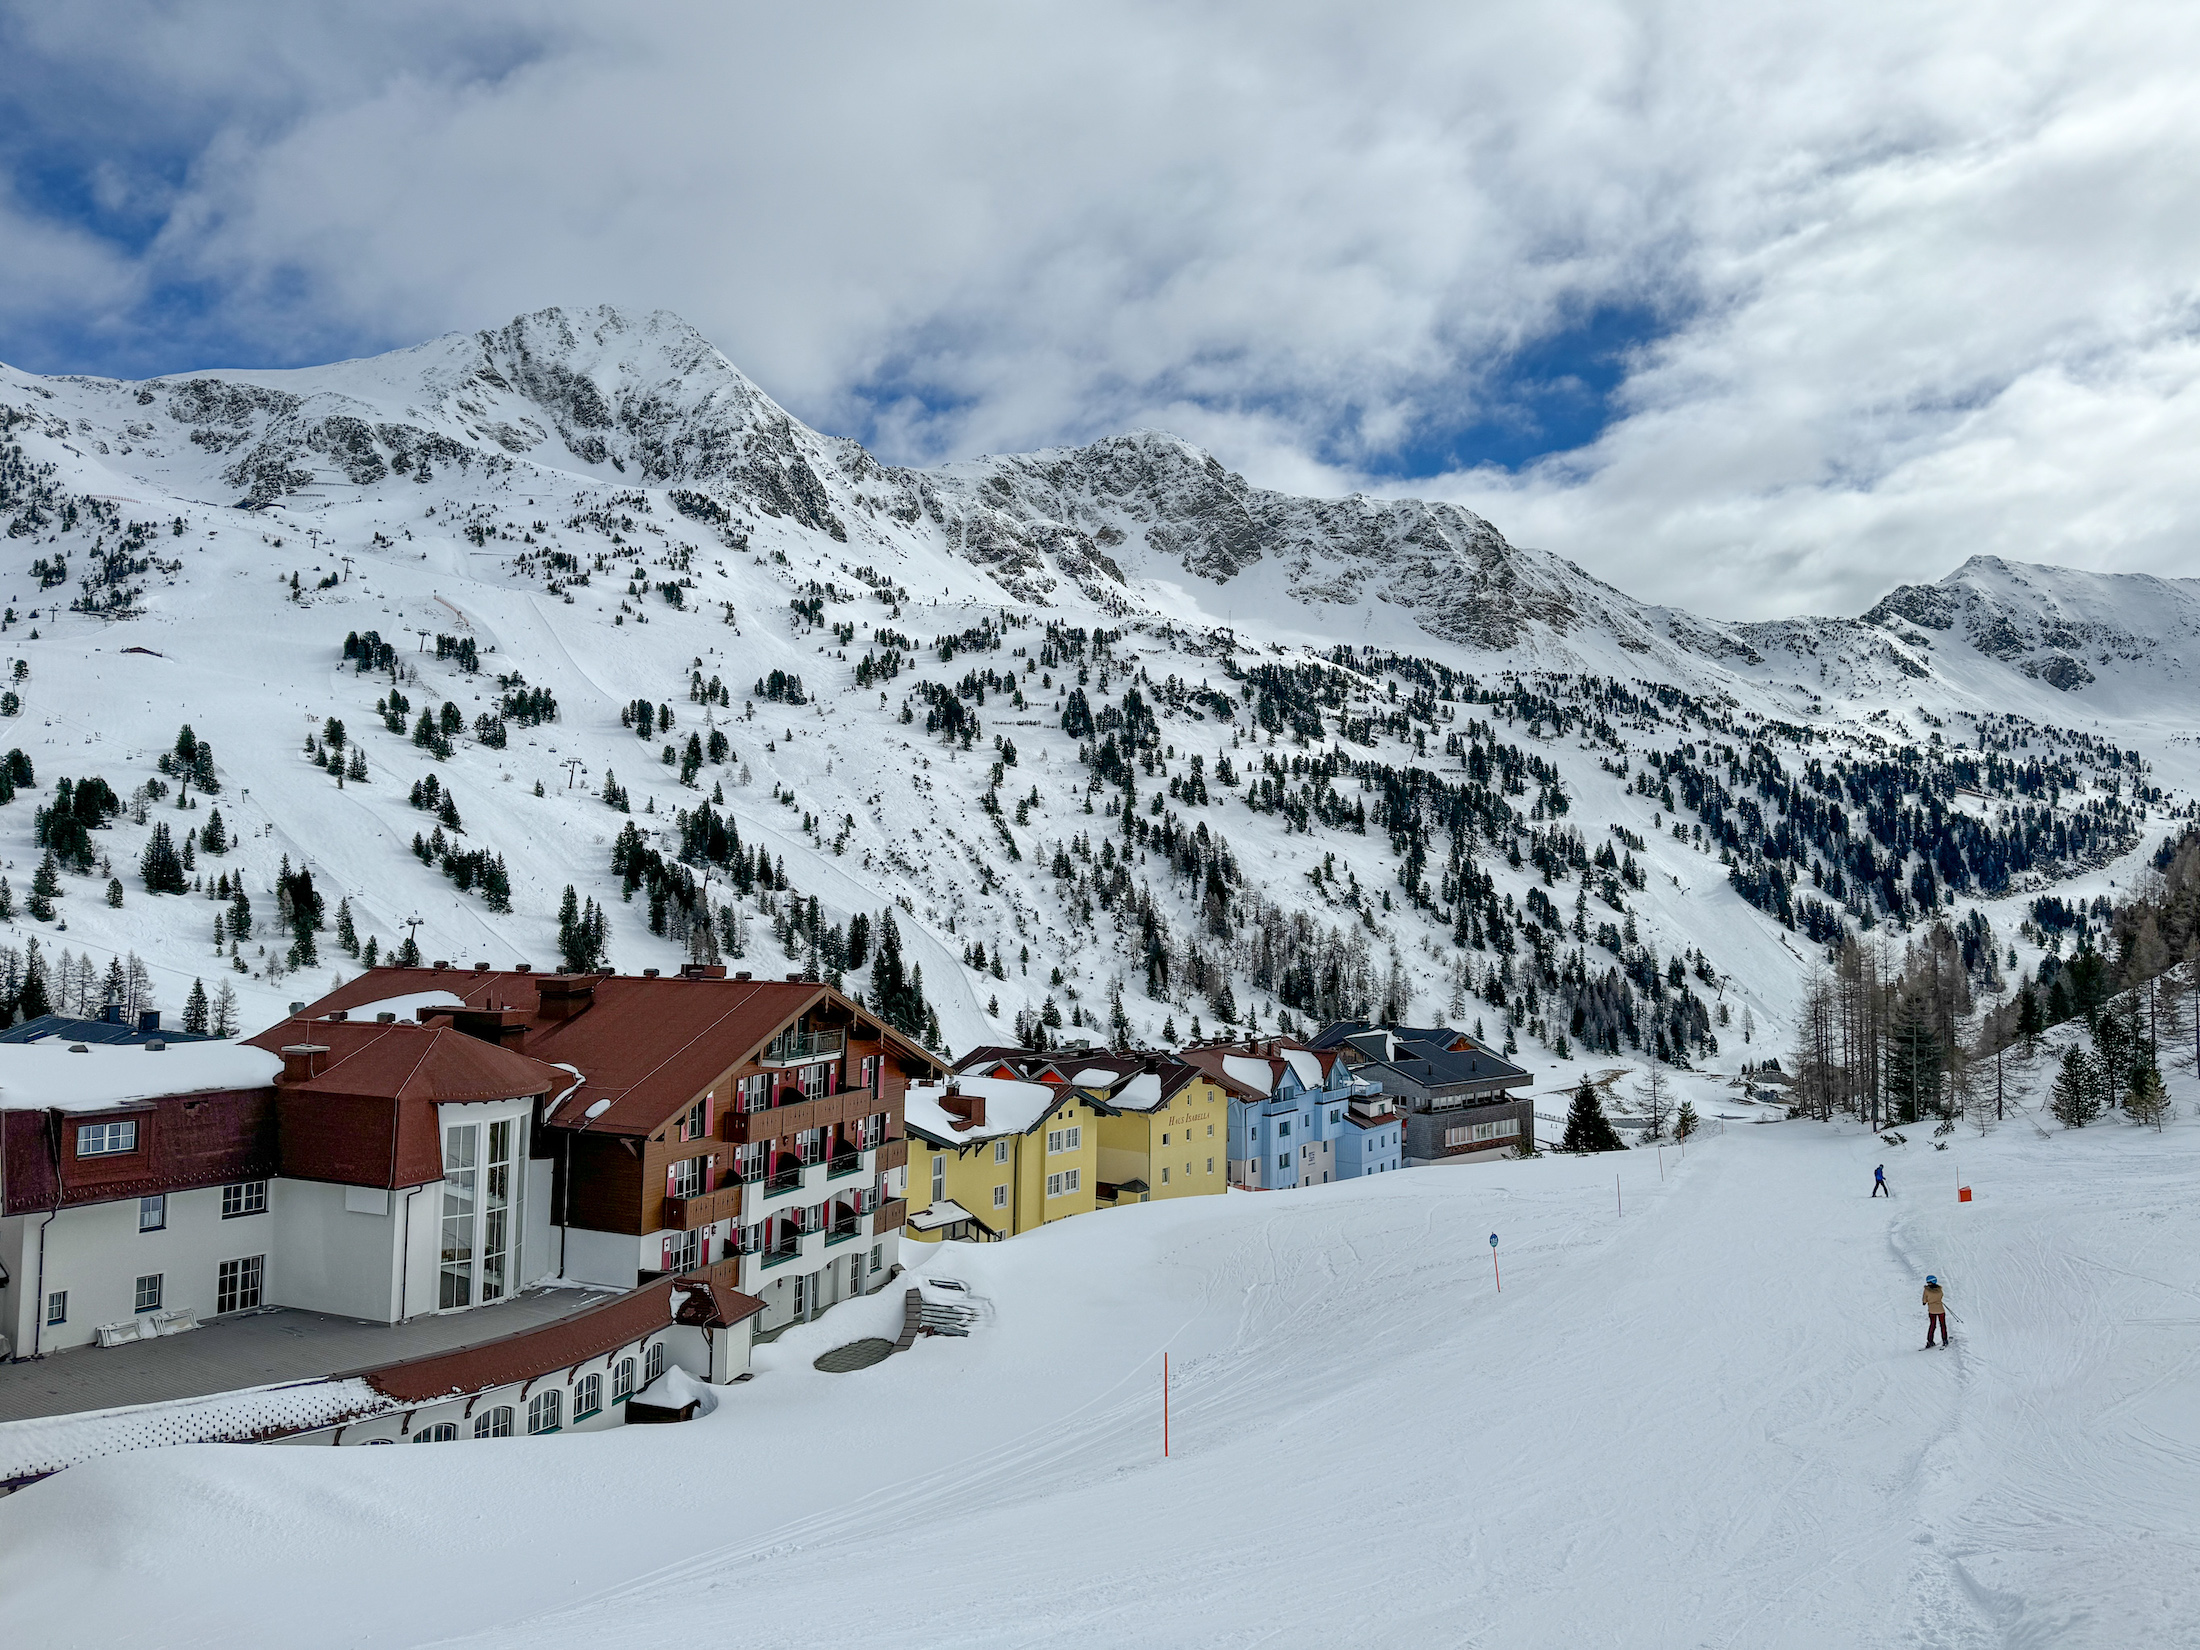 Ski-in, ski-out: in Obertauern heb je geen skibus nodig